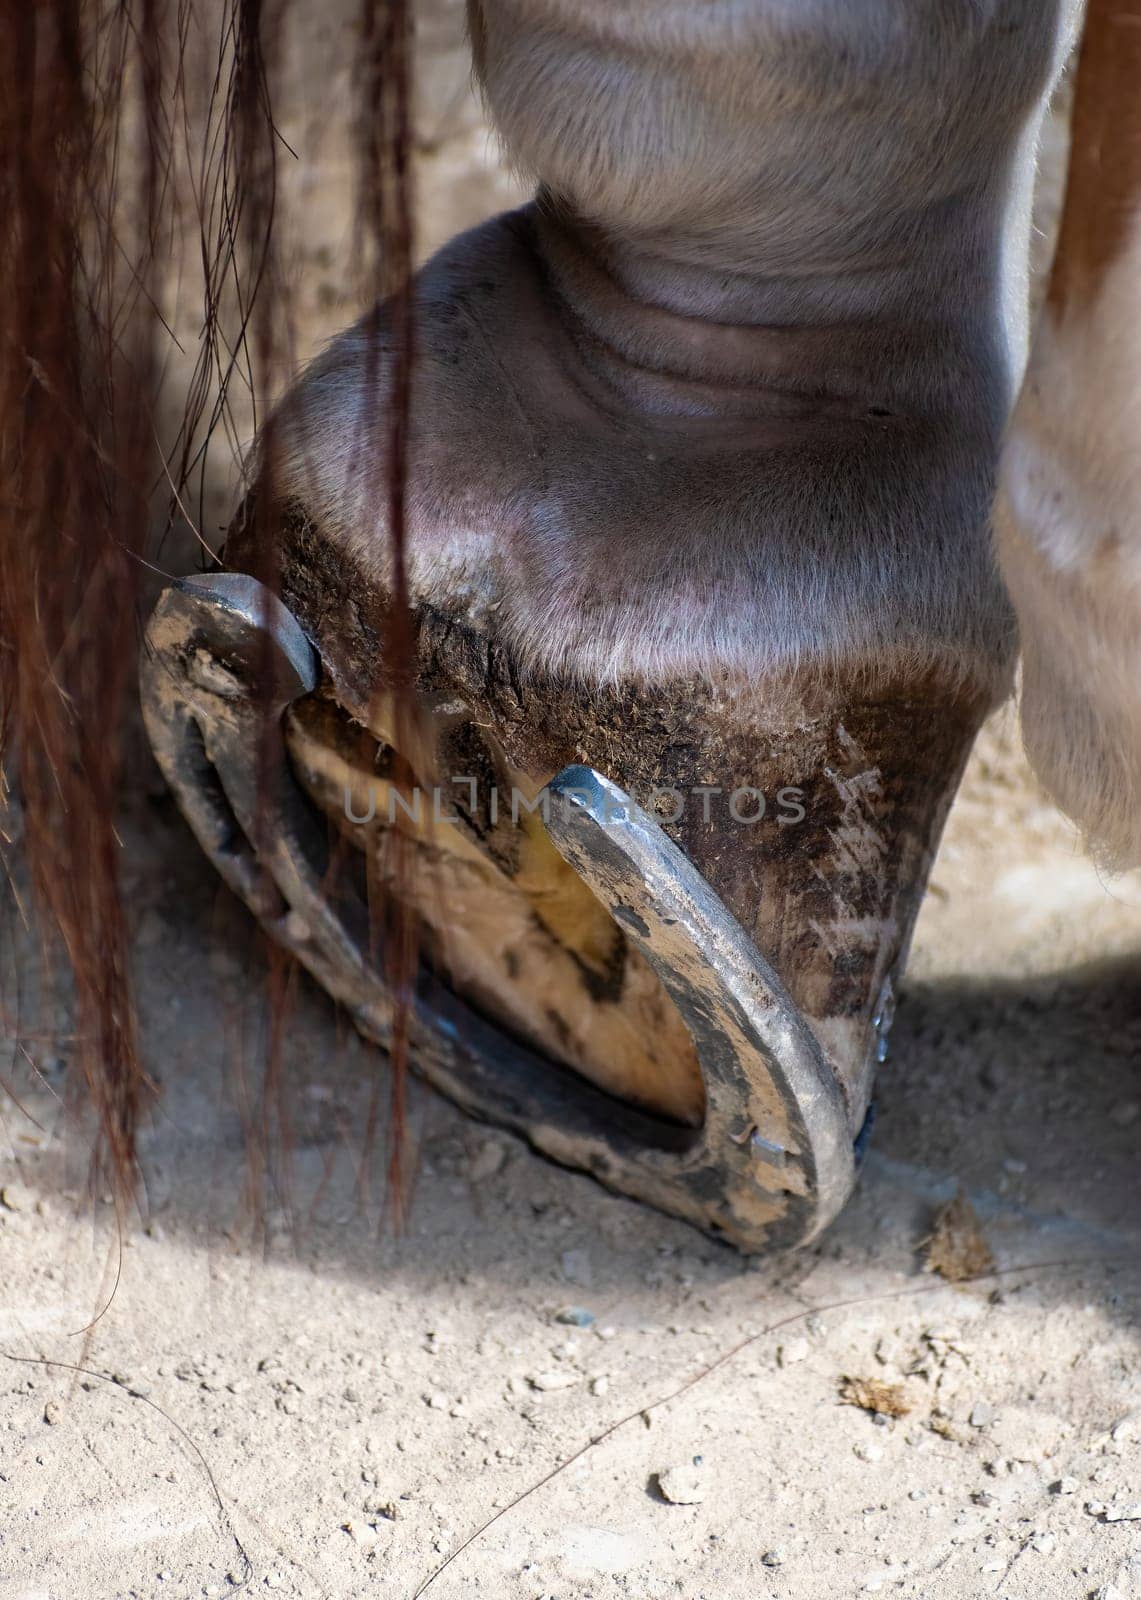 New horseshoe on the horse's hoof, demonstration of traditional craftsmanship